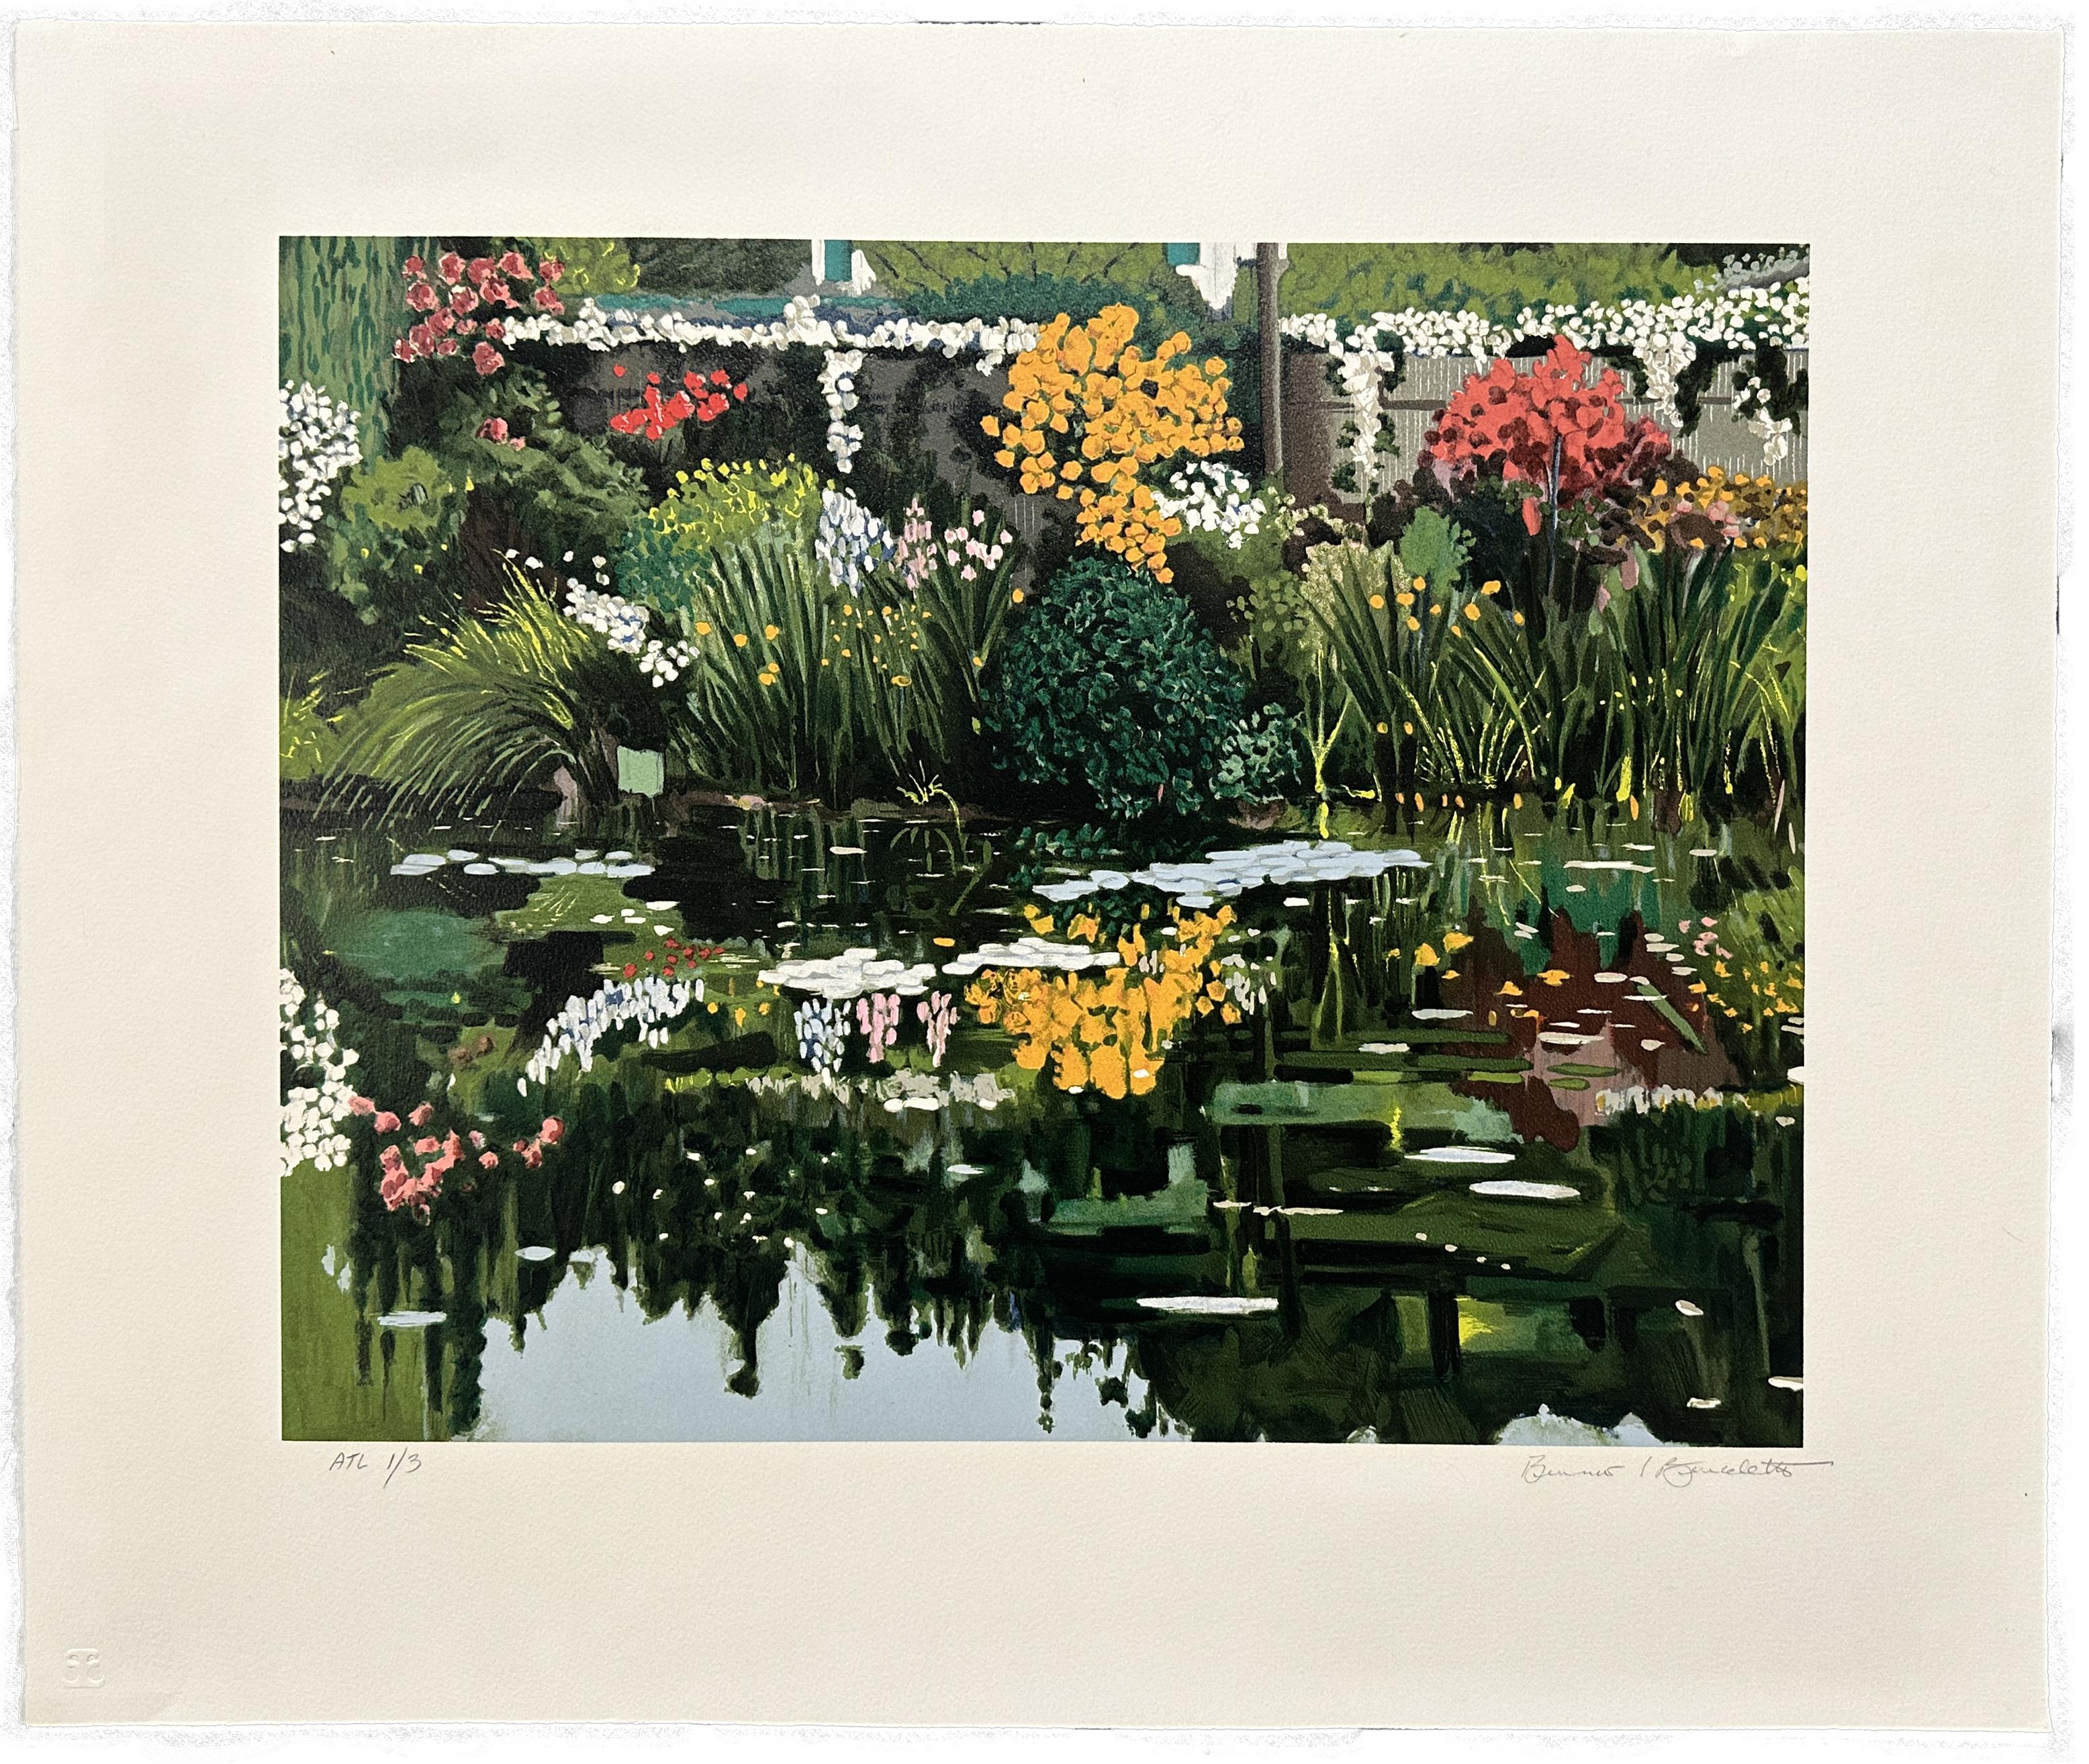 Tony Bennett Landscape Print - Monet's Garden Signed Limited Edition Lithograph 